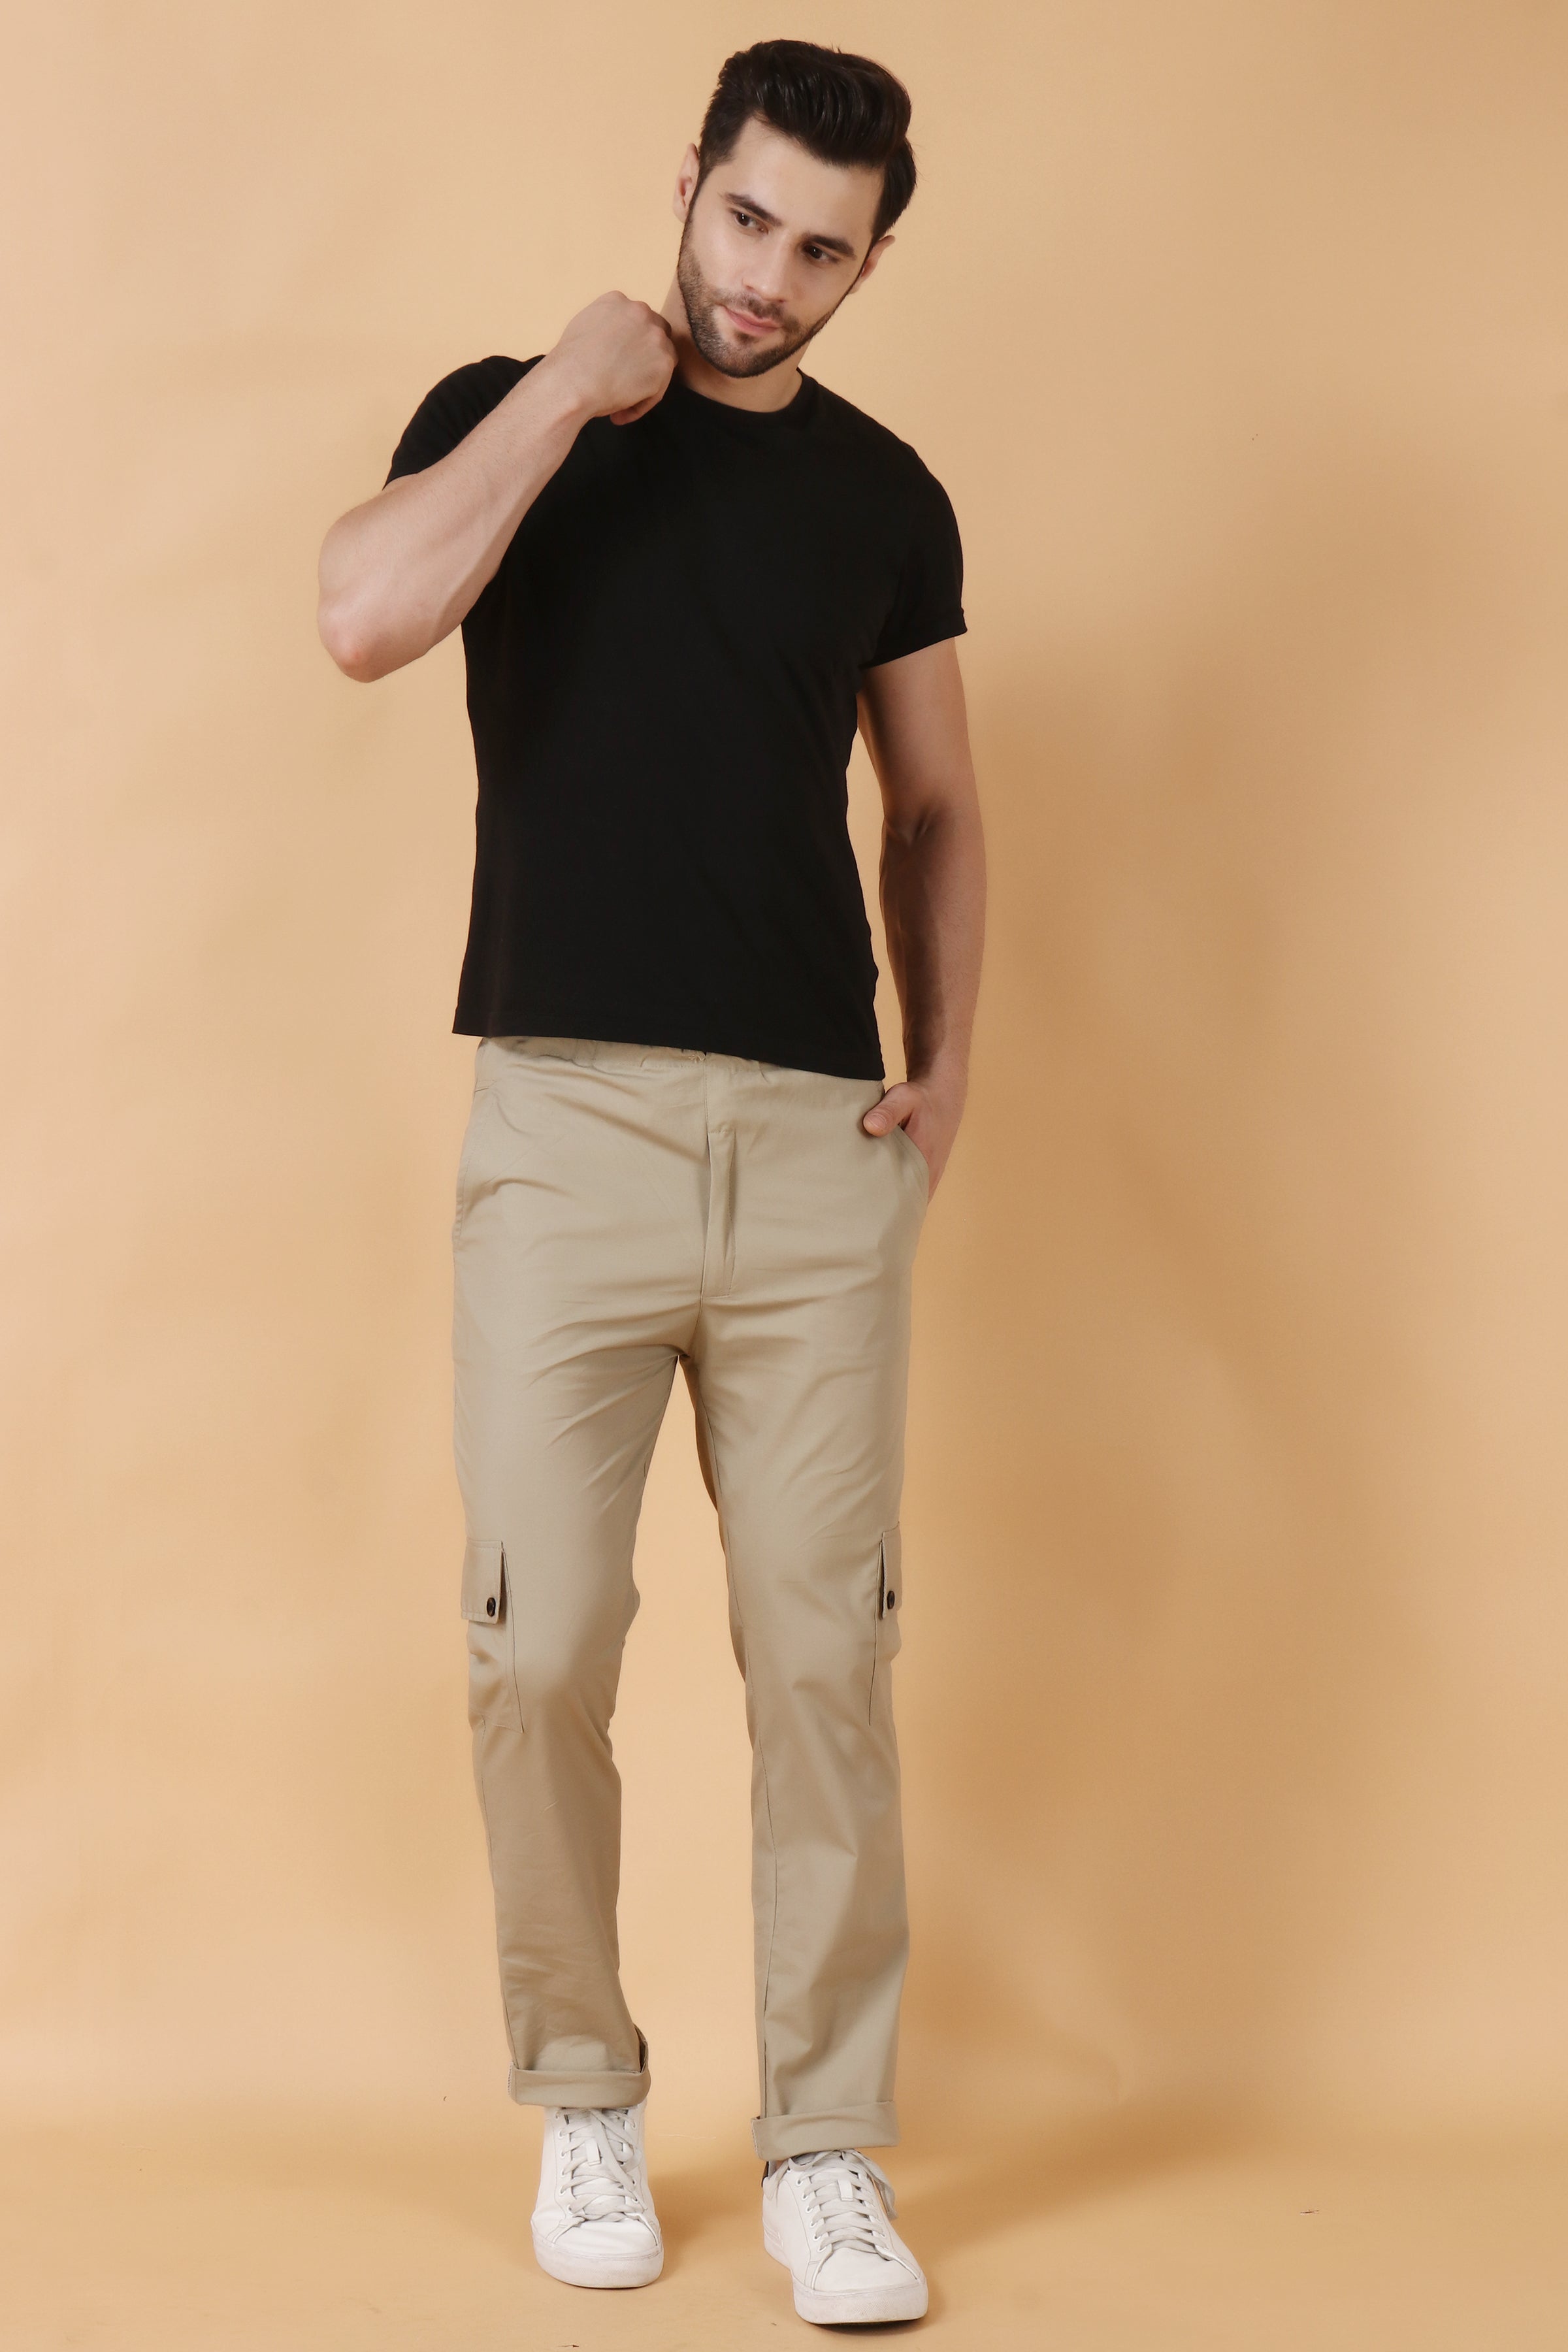 Colorplus Mens Trousers  Buy Colorplus Mens Trousers Online at Best Prices  In India  Flipkartcom